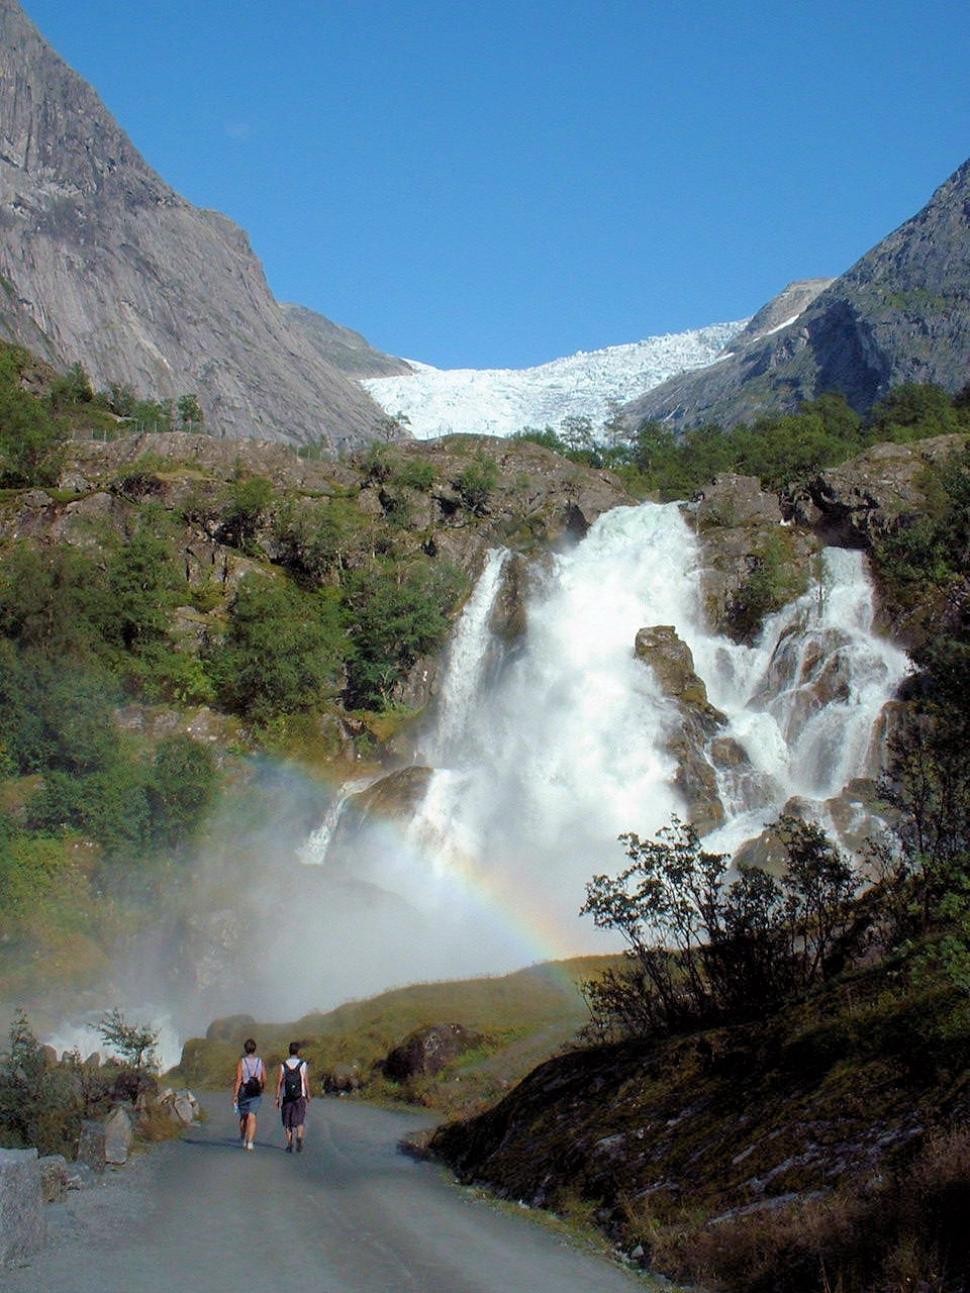 Free Image of Norway waterfall 